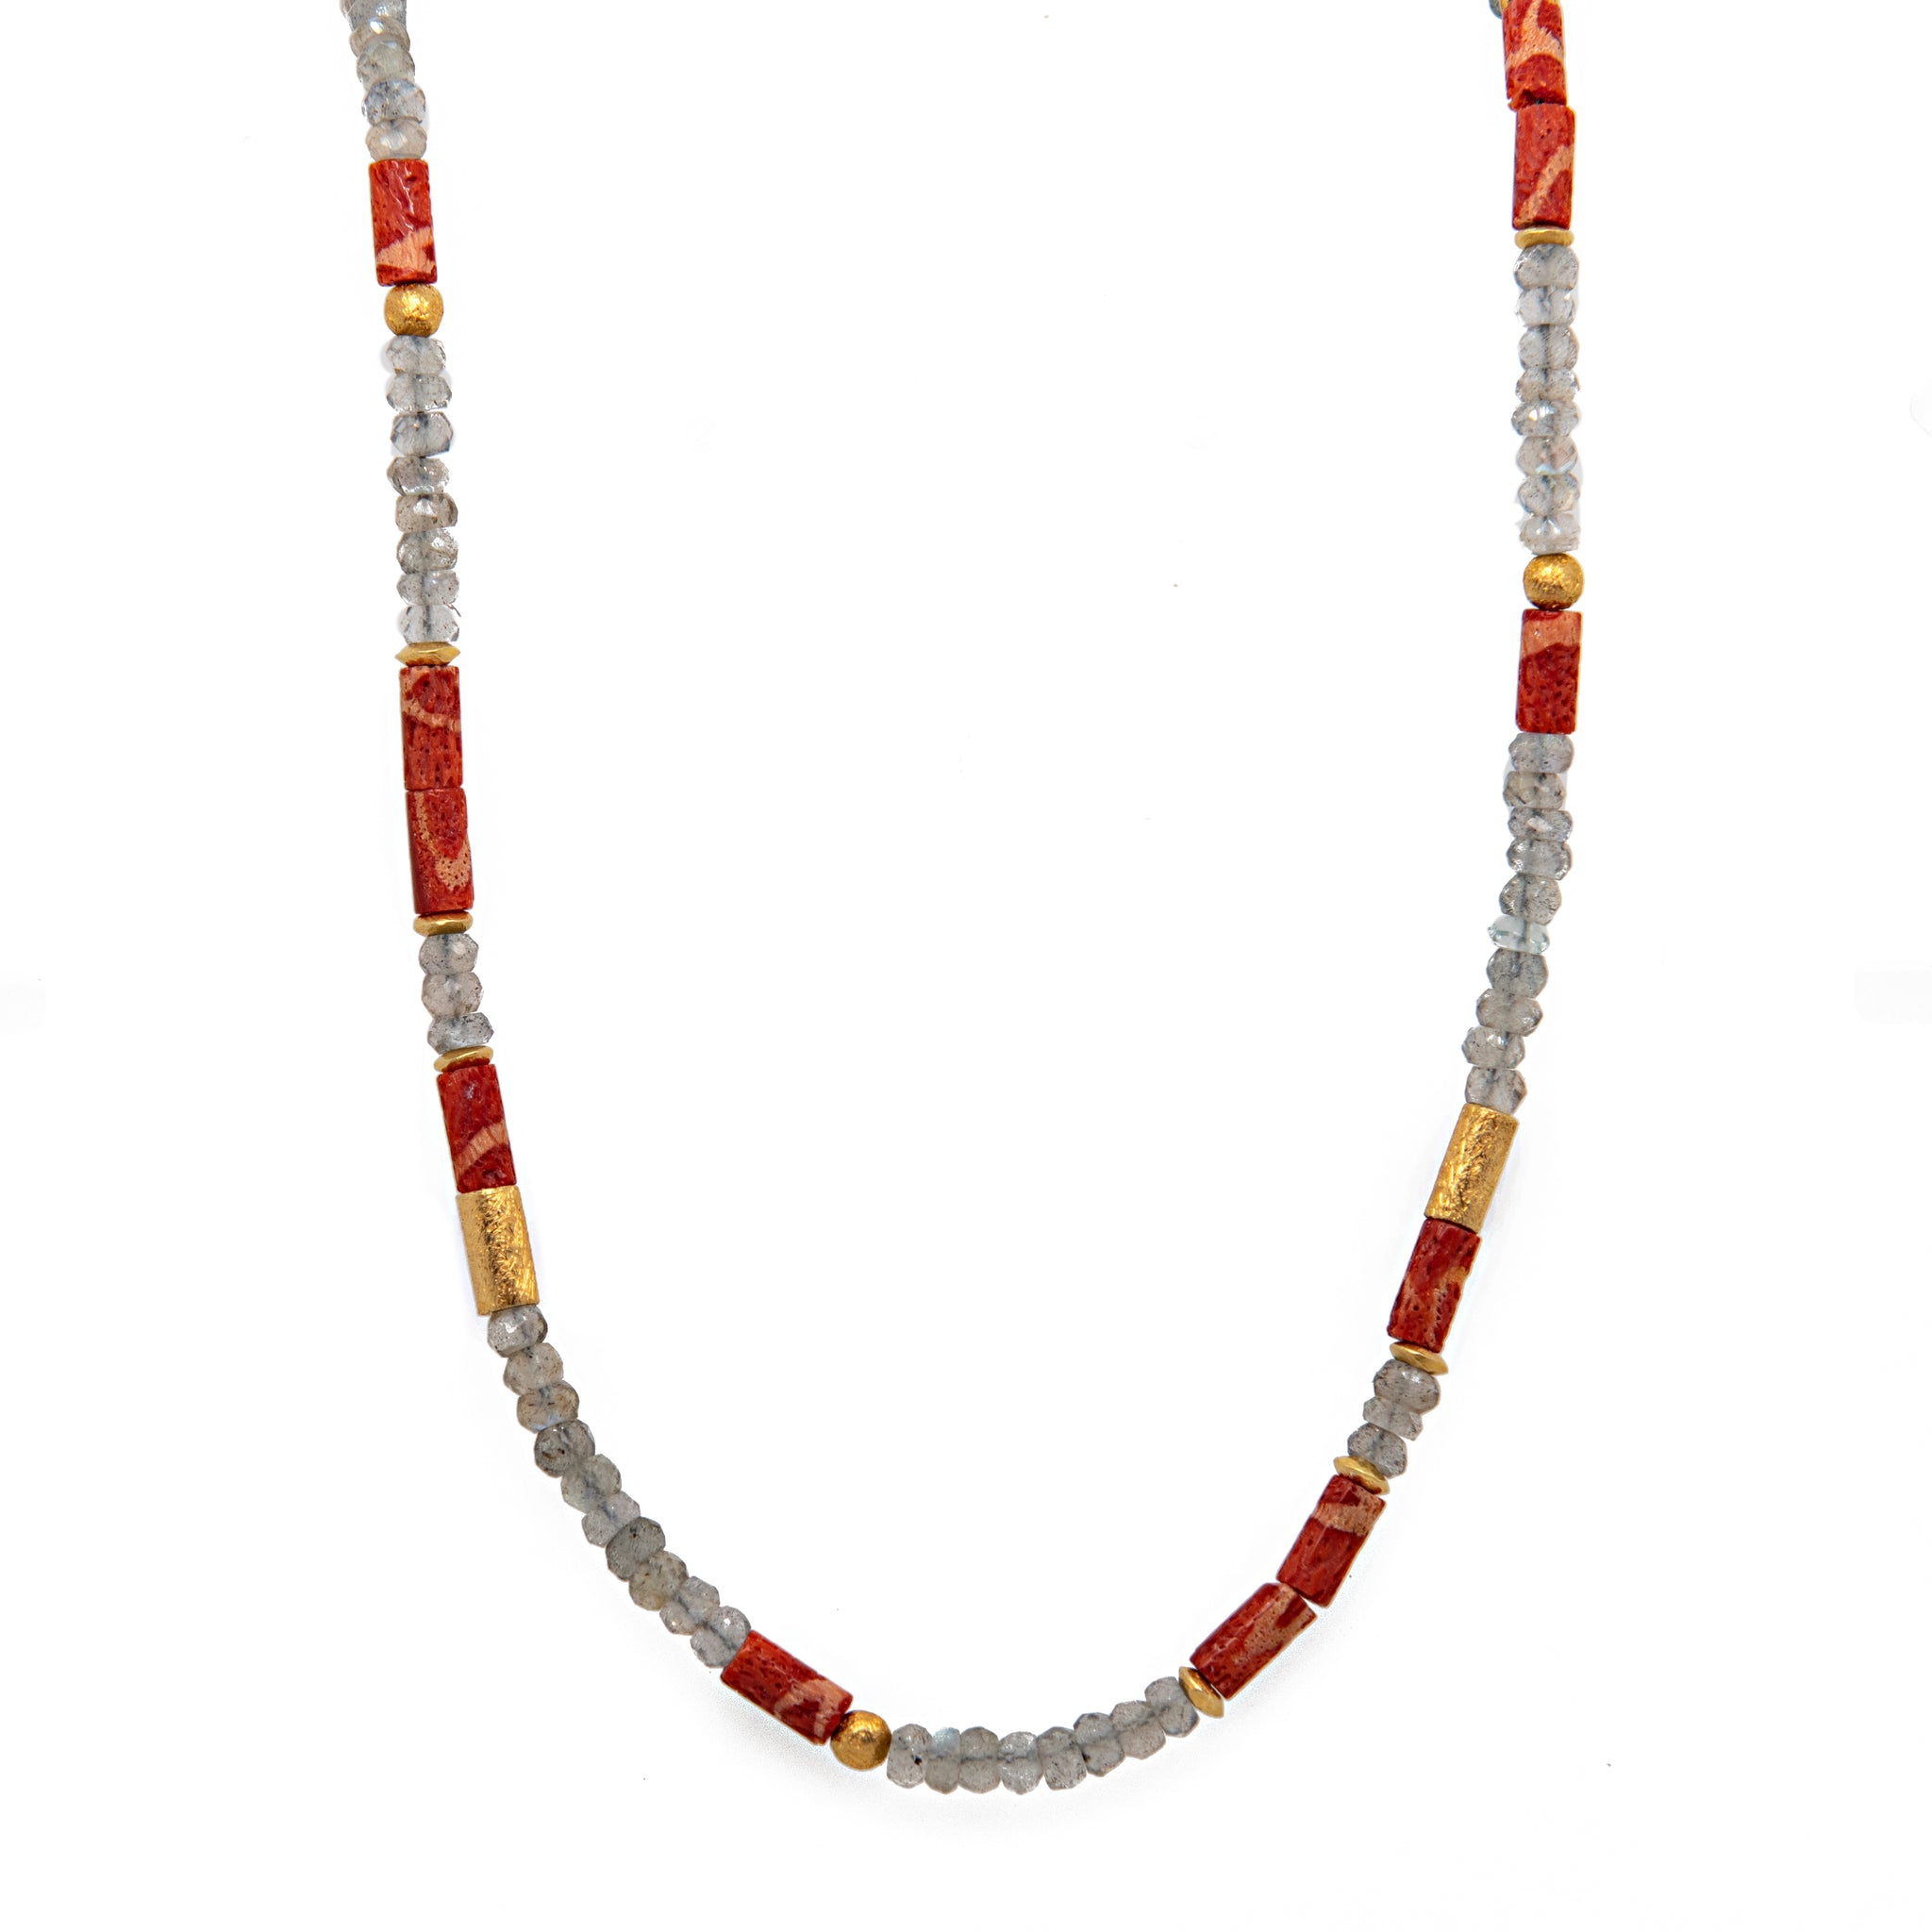 Coral and Labradorite Necklace 3mm 24K Fair Trade Gold Vermeil